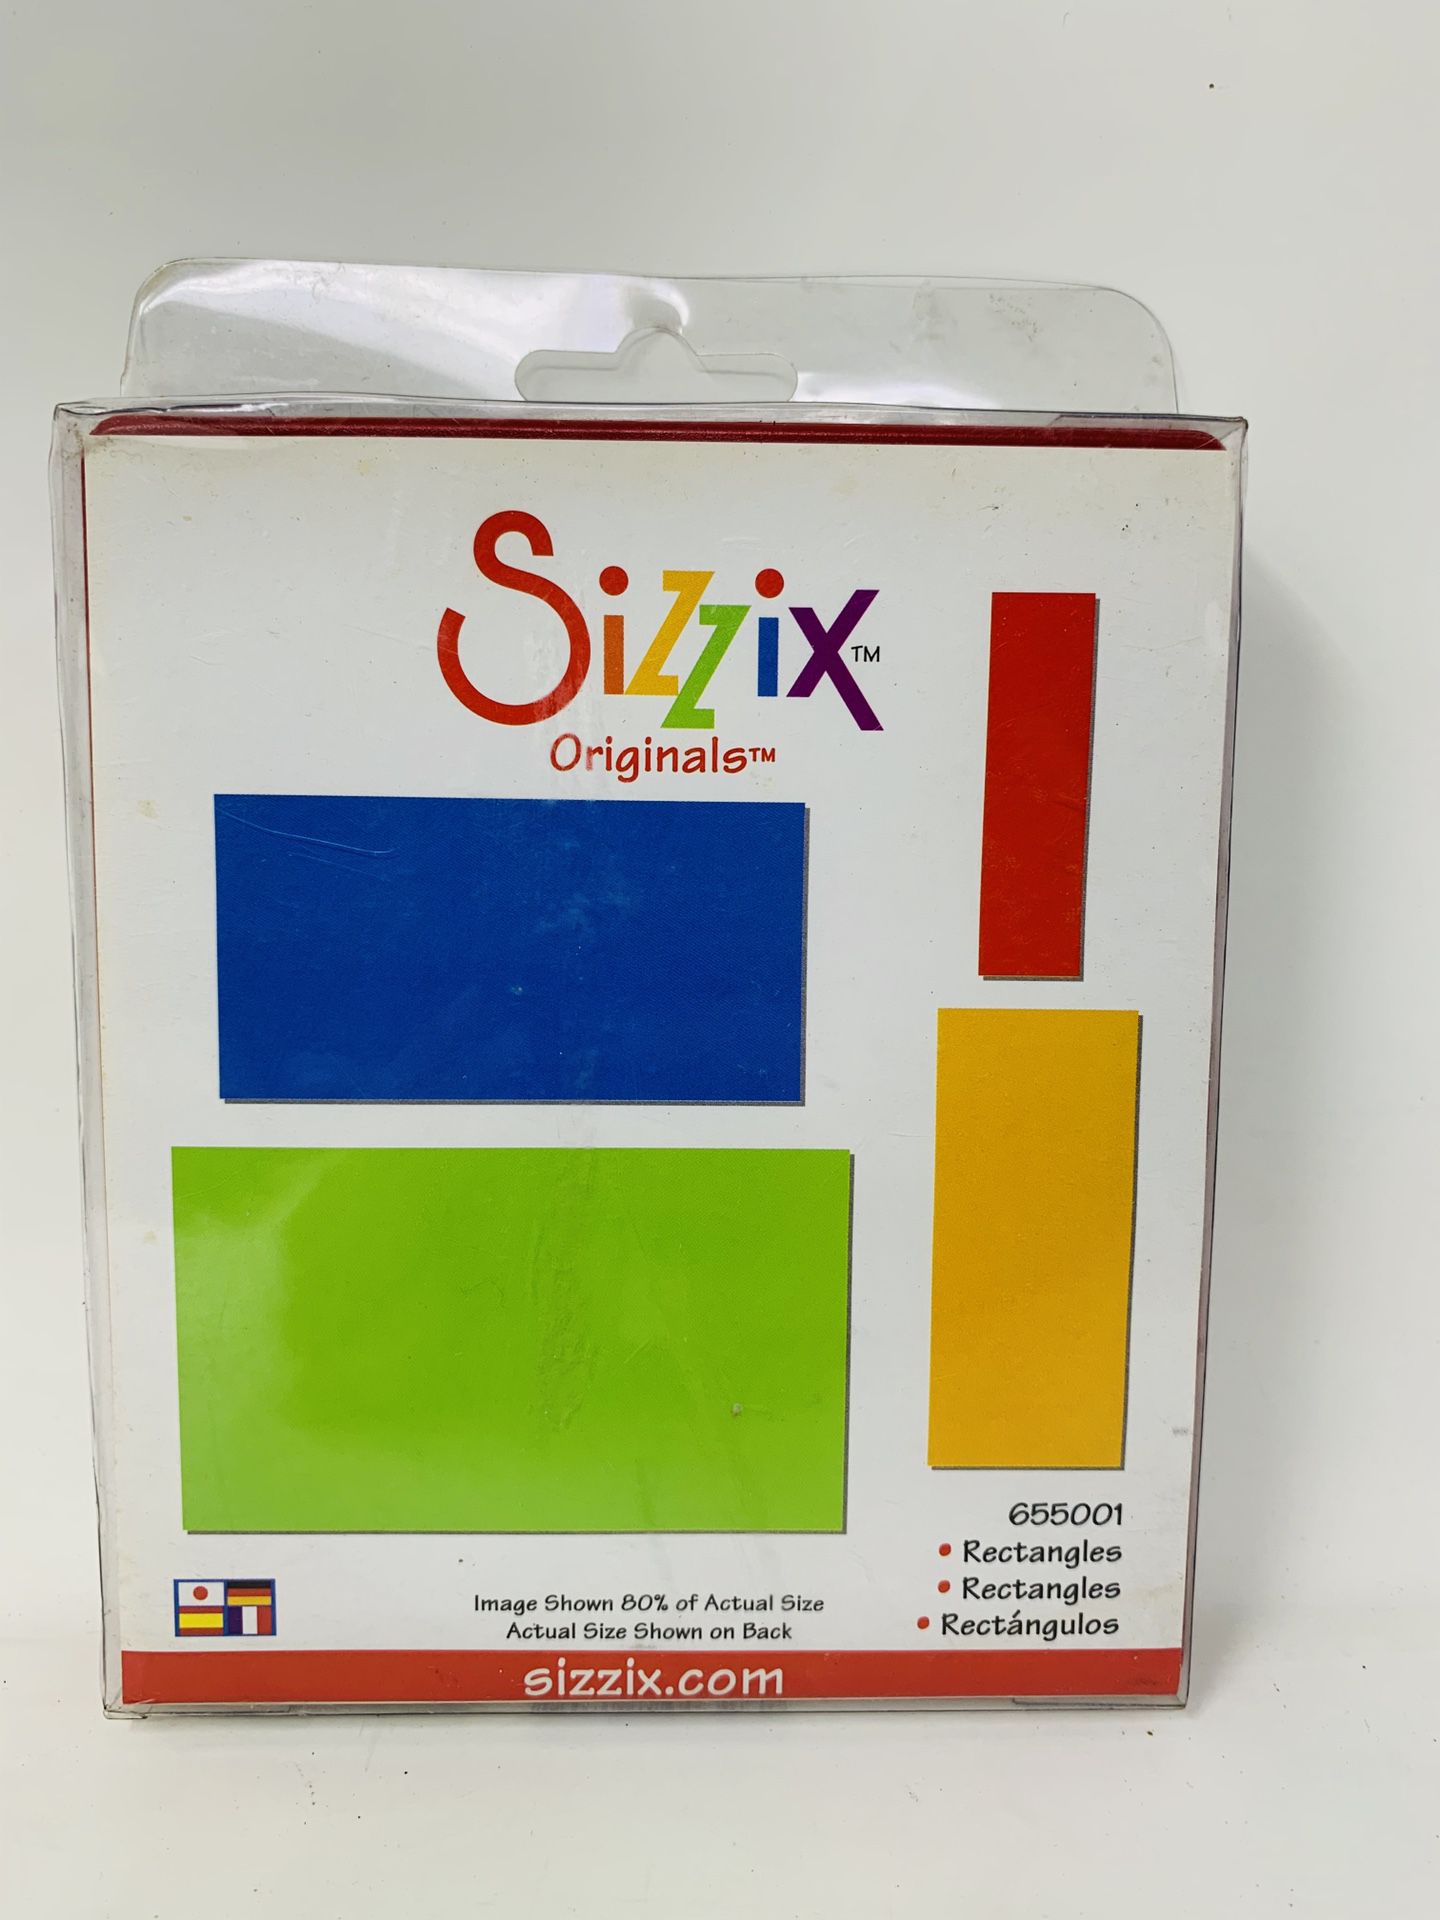 Sizzix rectangles